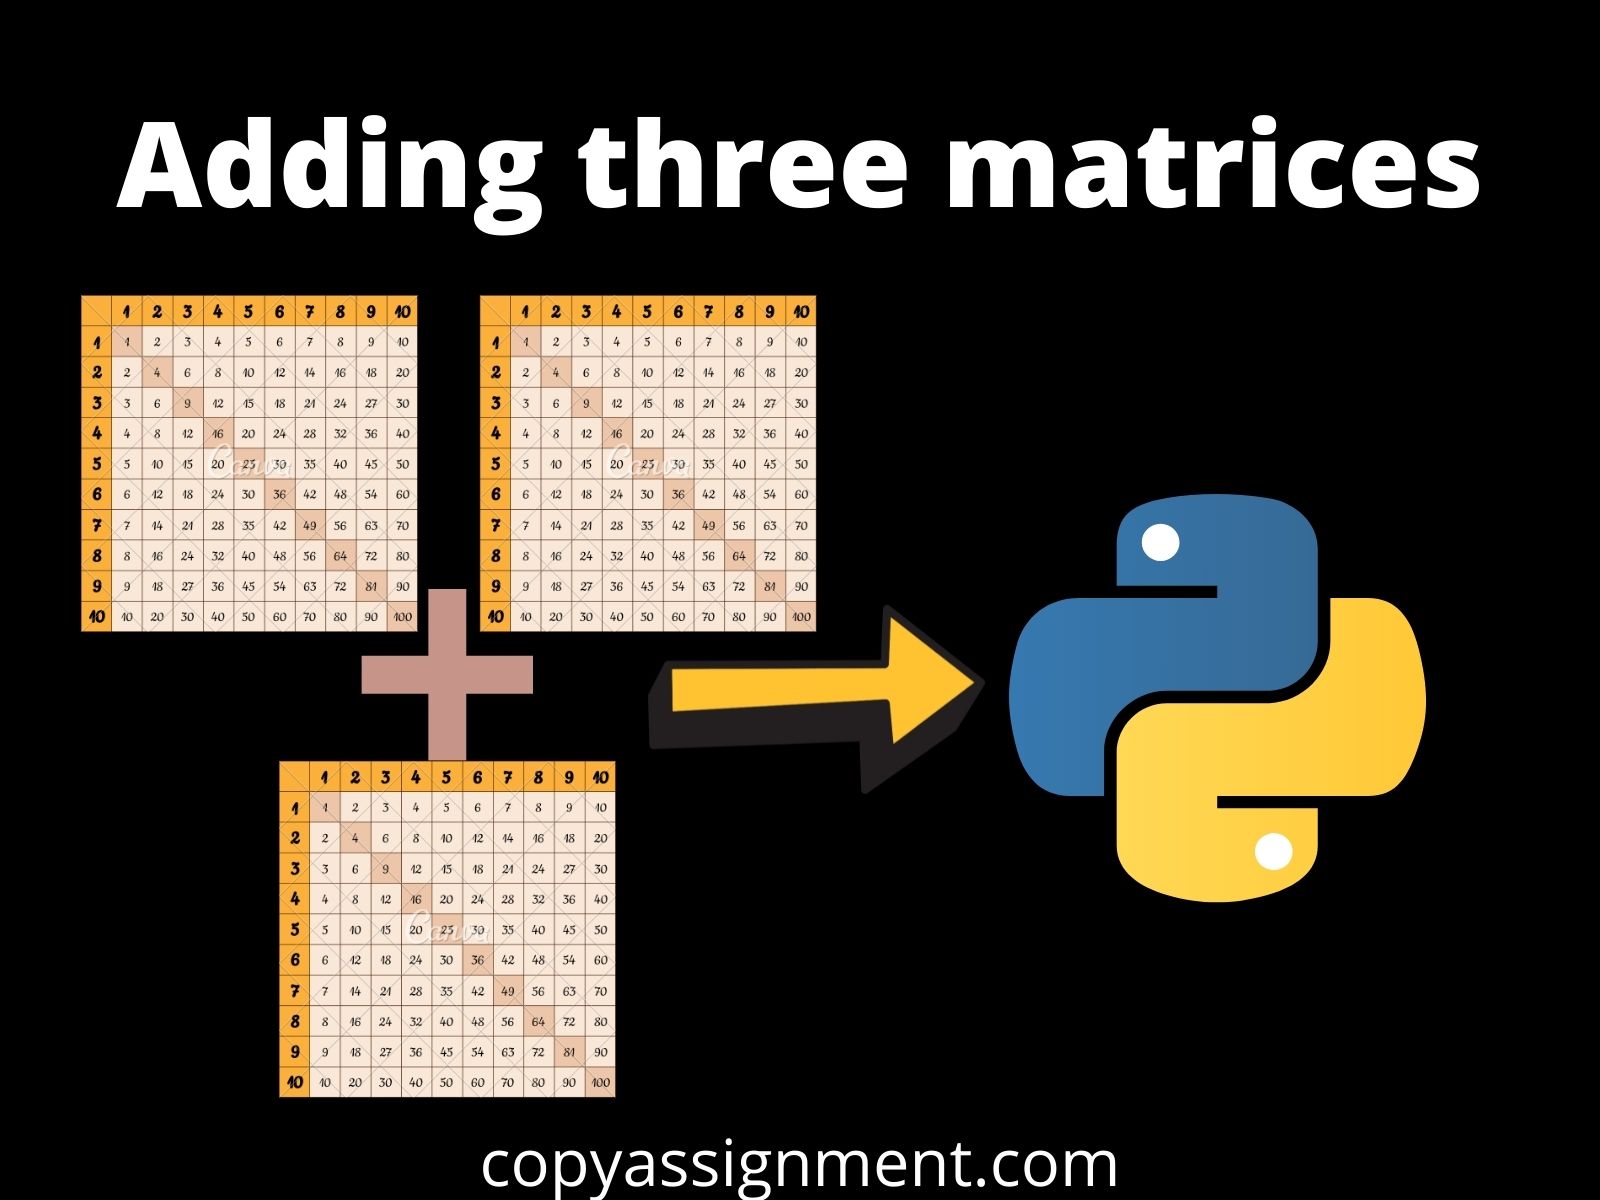 Adding three matrices